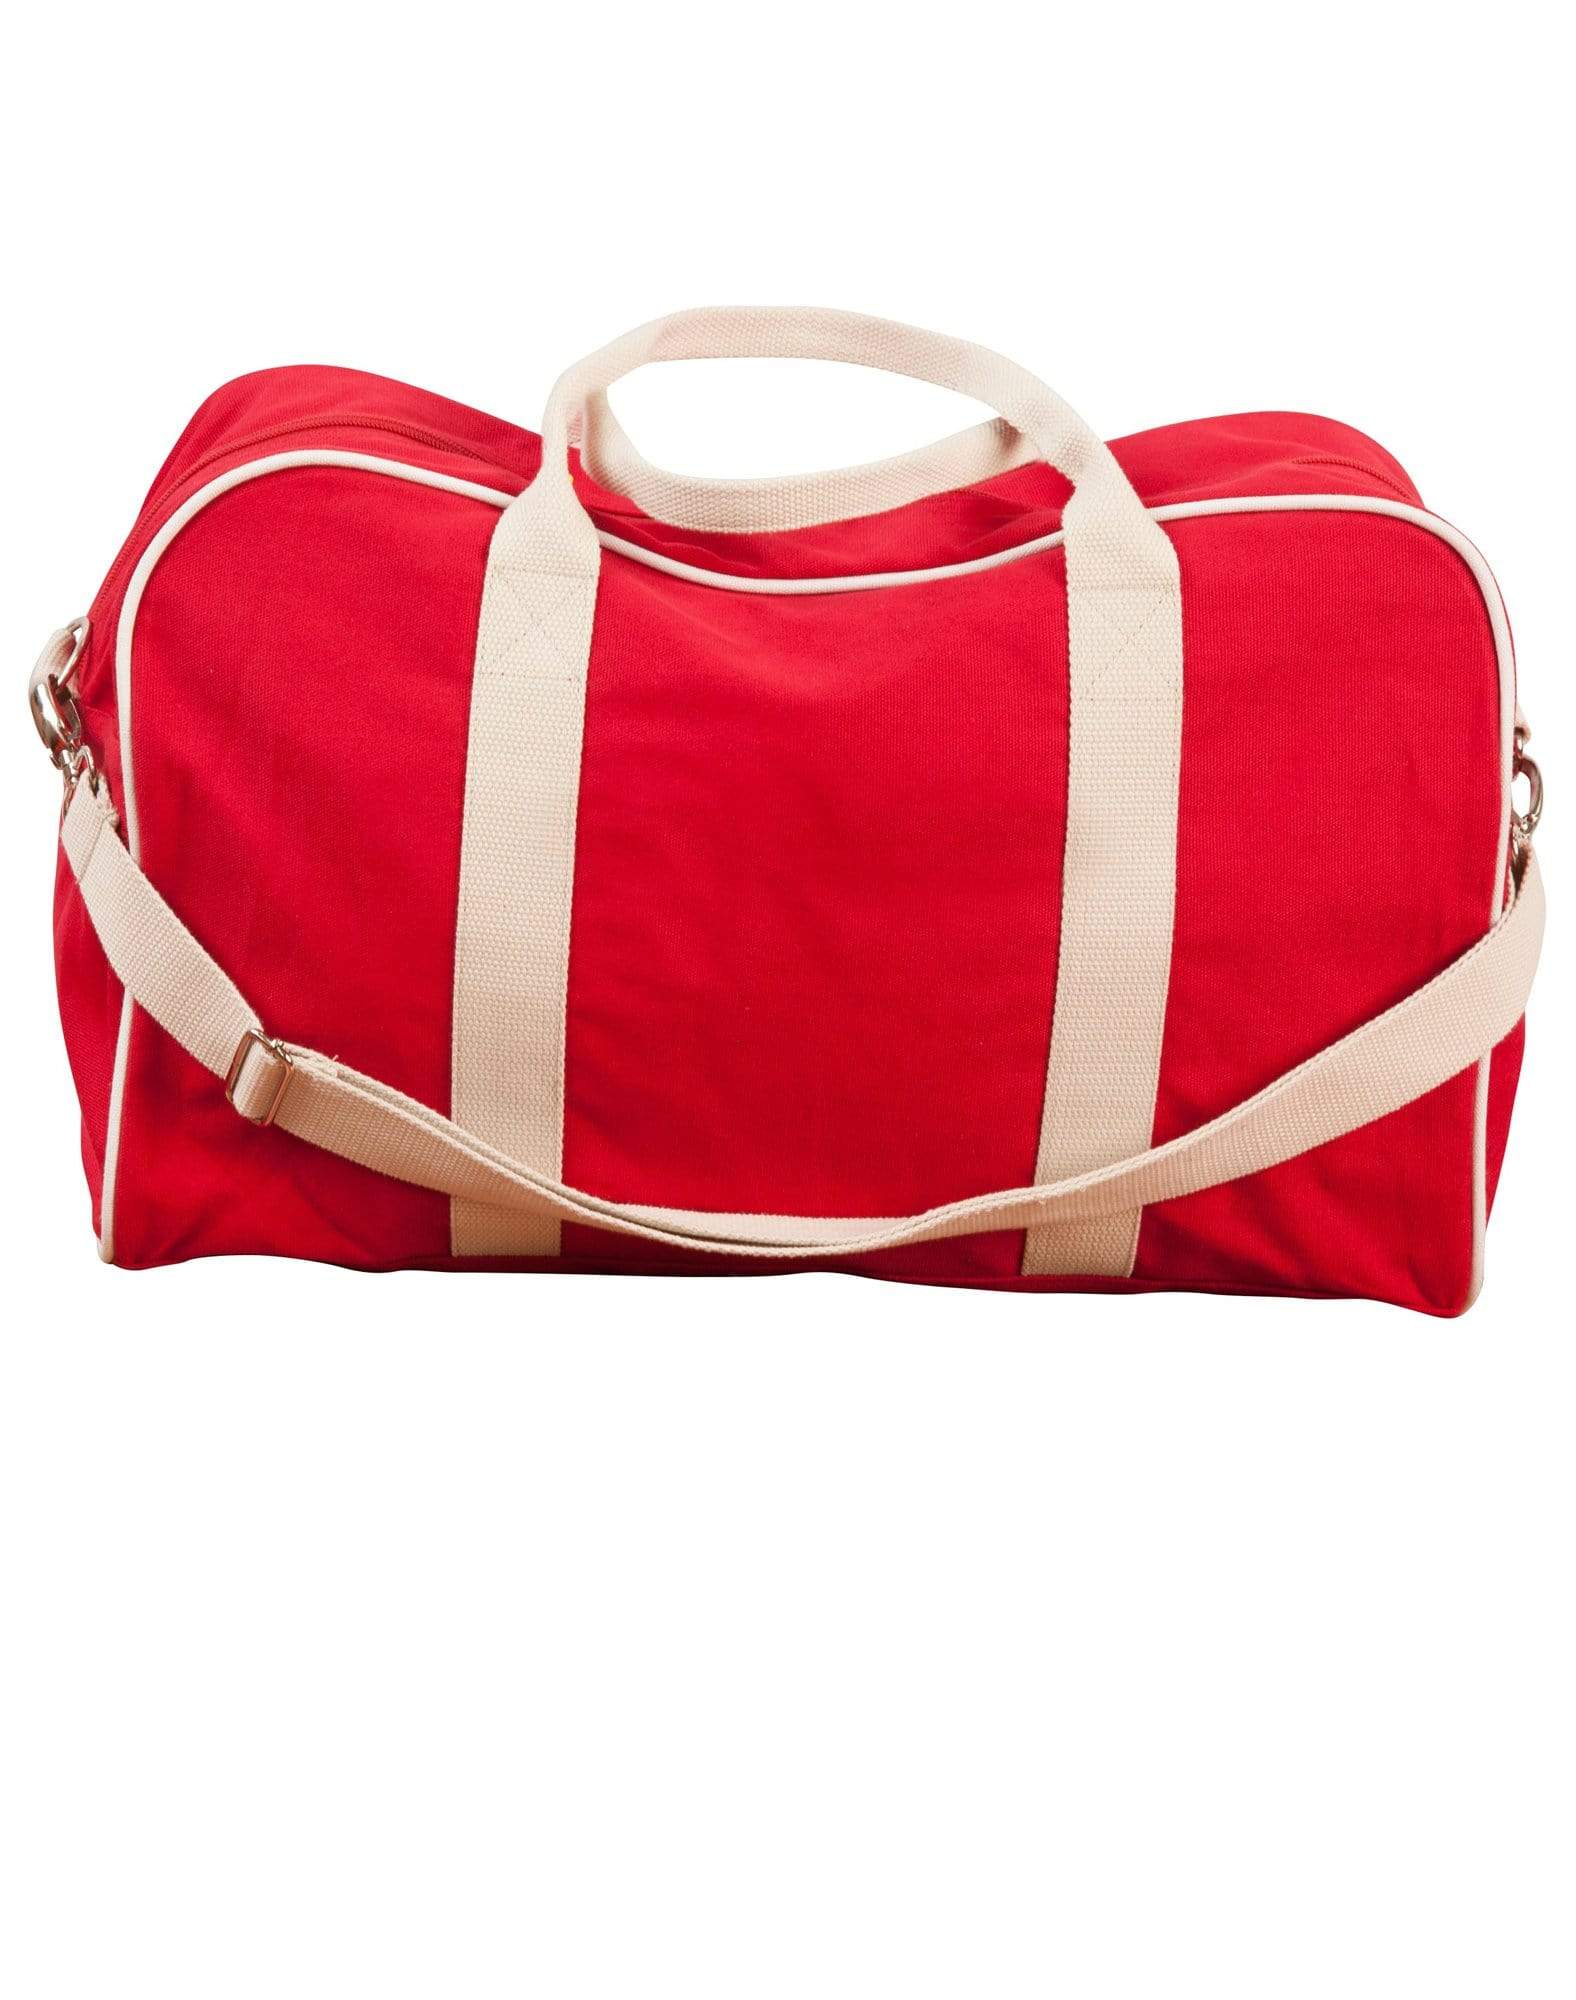 Impact Casual Bag B2100 Active Wear Winning Spirit Red/Natural "(w)58cm x (h)35cm x (d)25cm 50 Litres Capacity" 